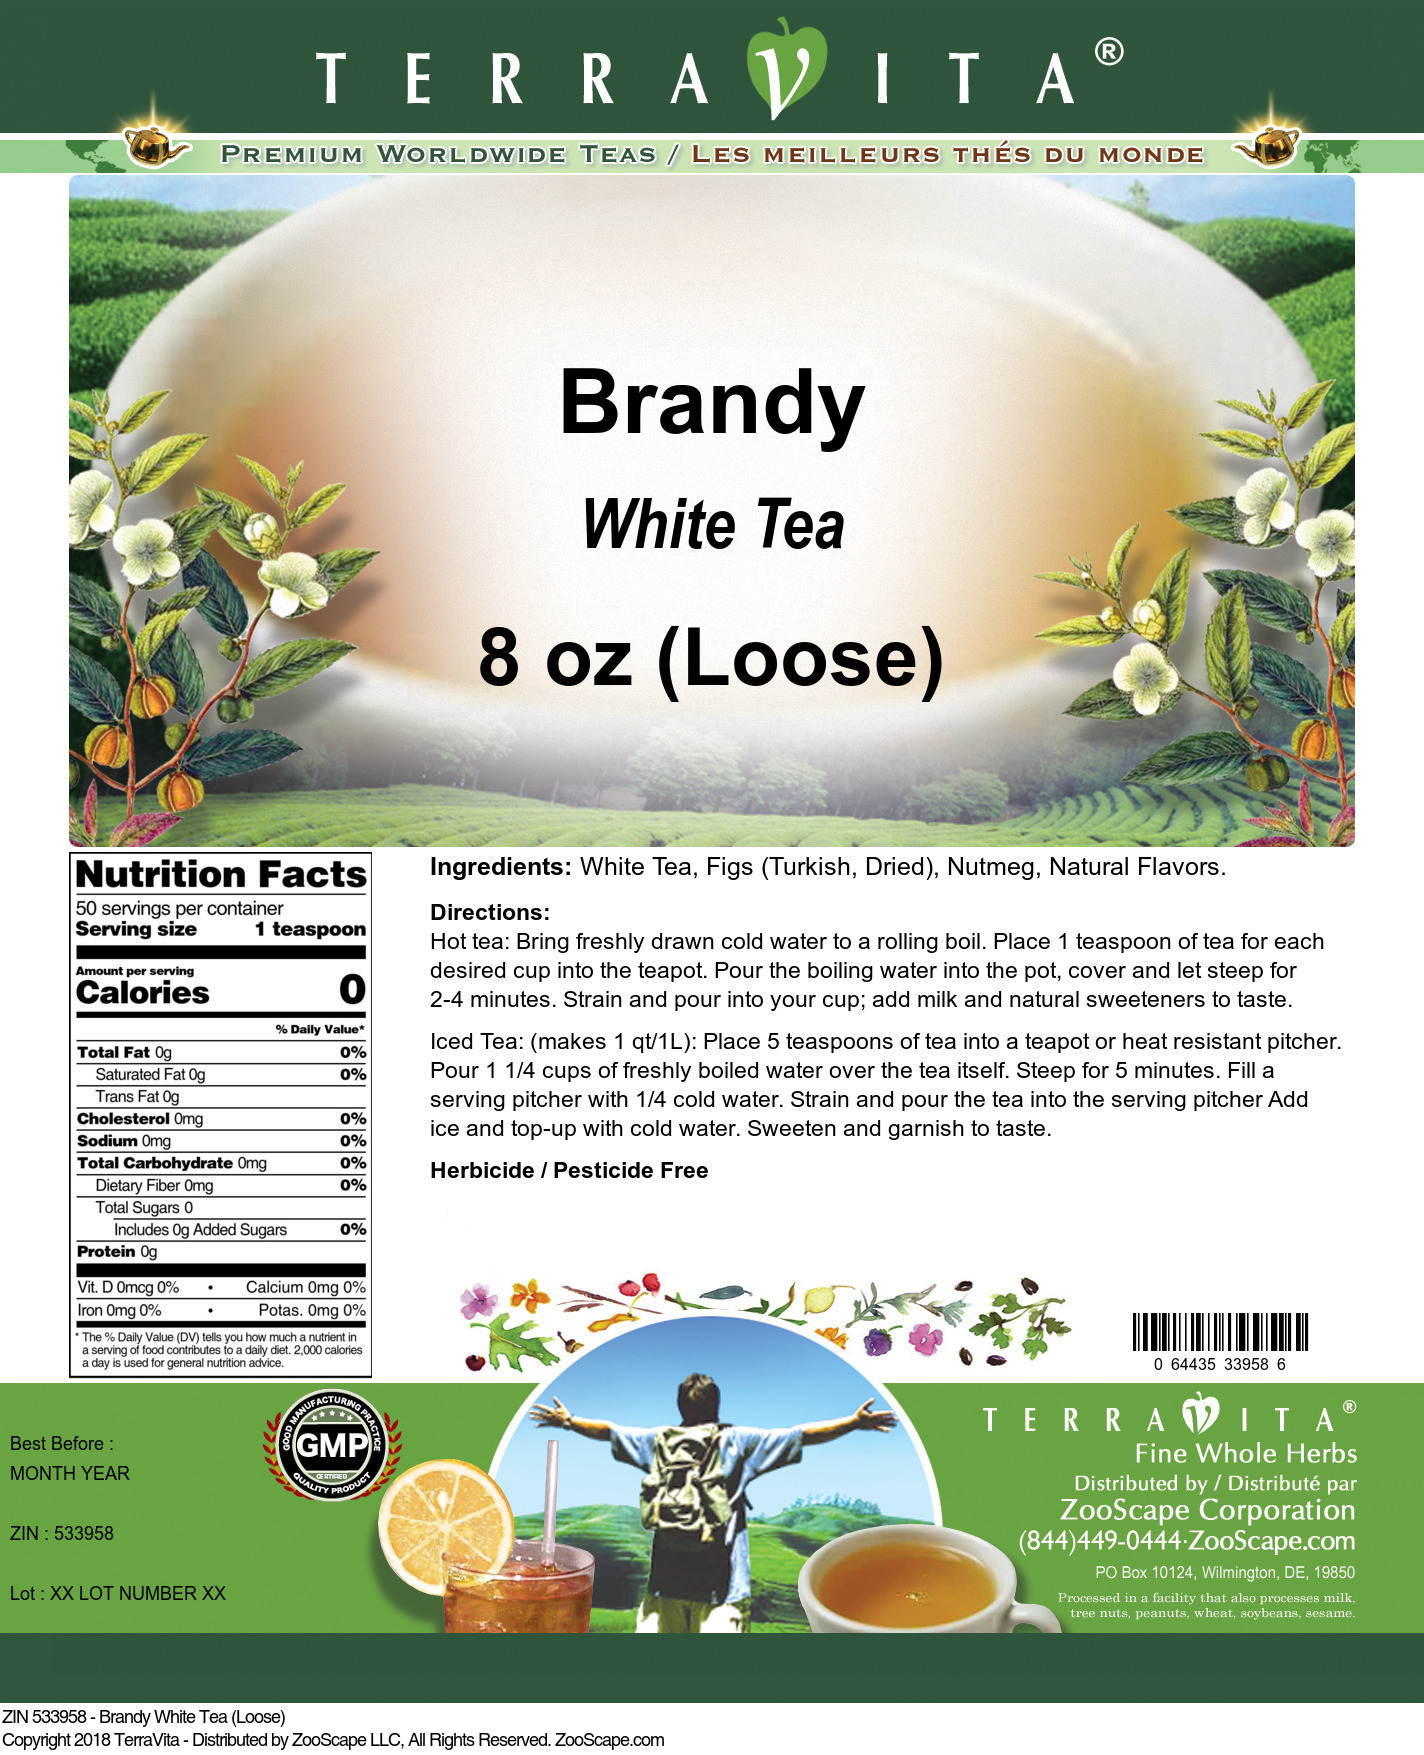 Brandy White Tea (Loose) - Label